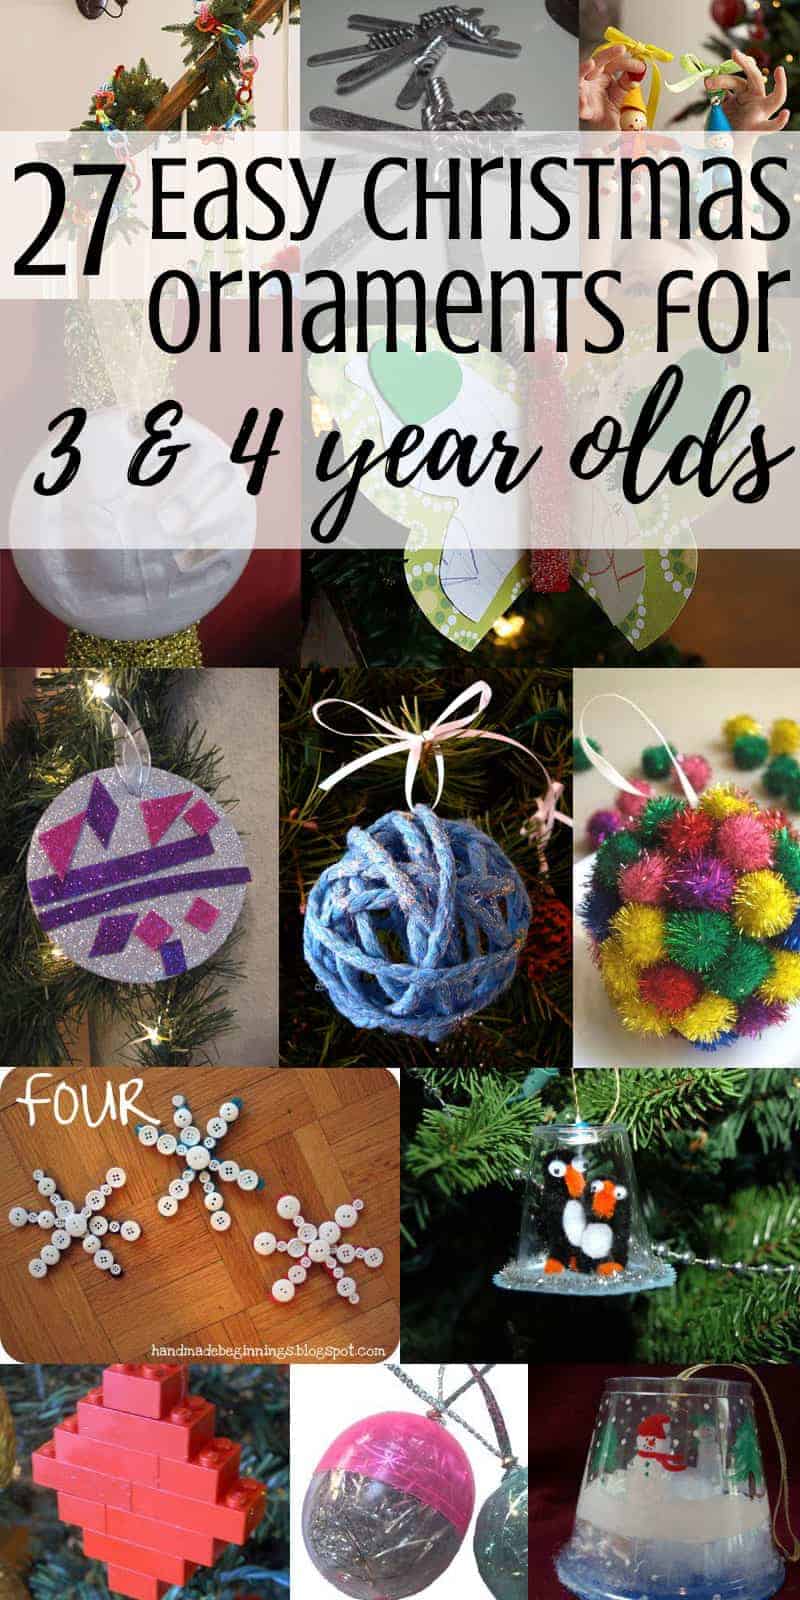 27 Ornaments to Make With a Preschooler | Feels Like Home™